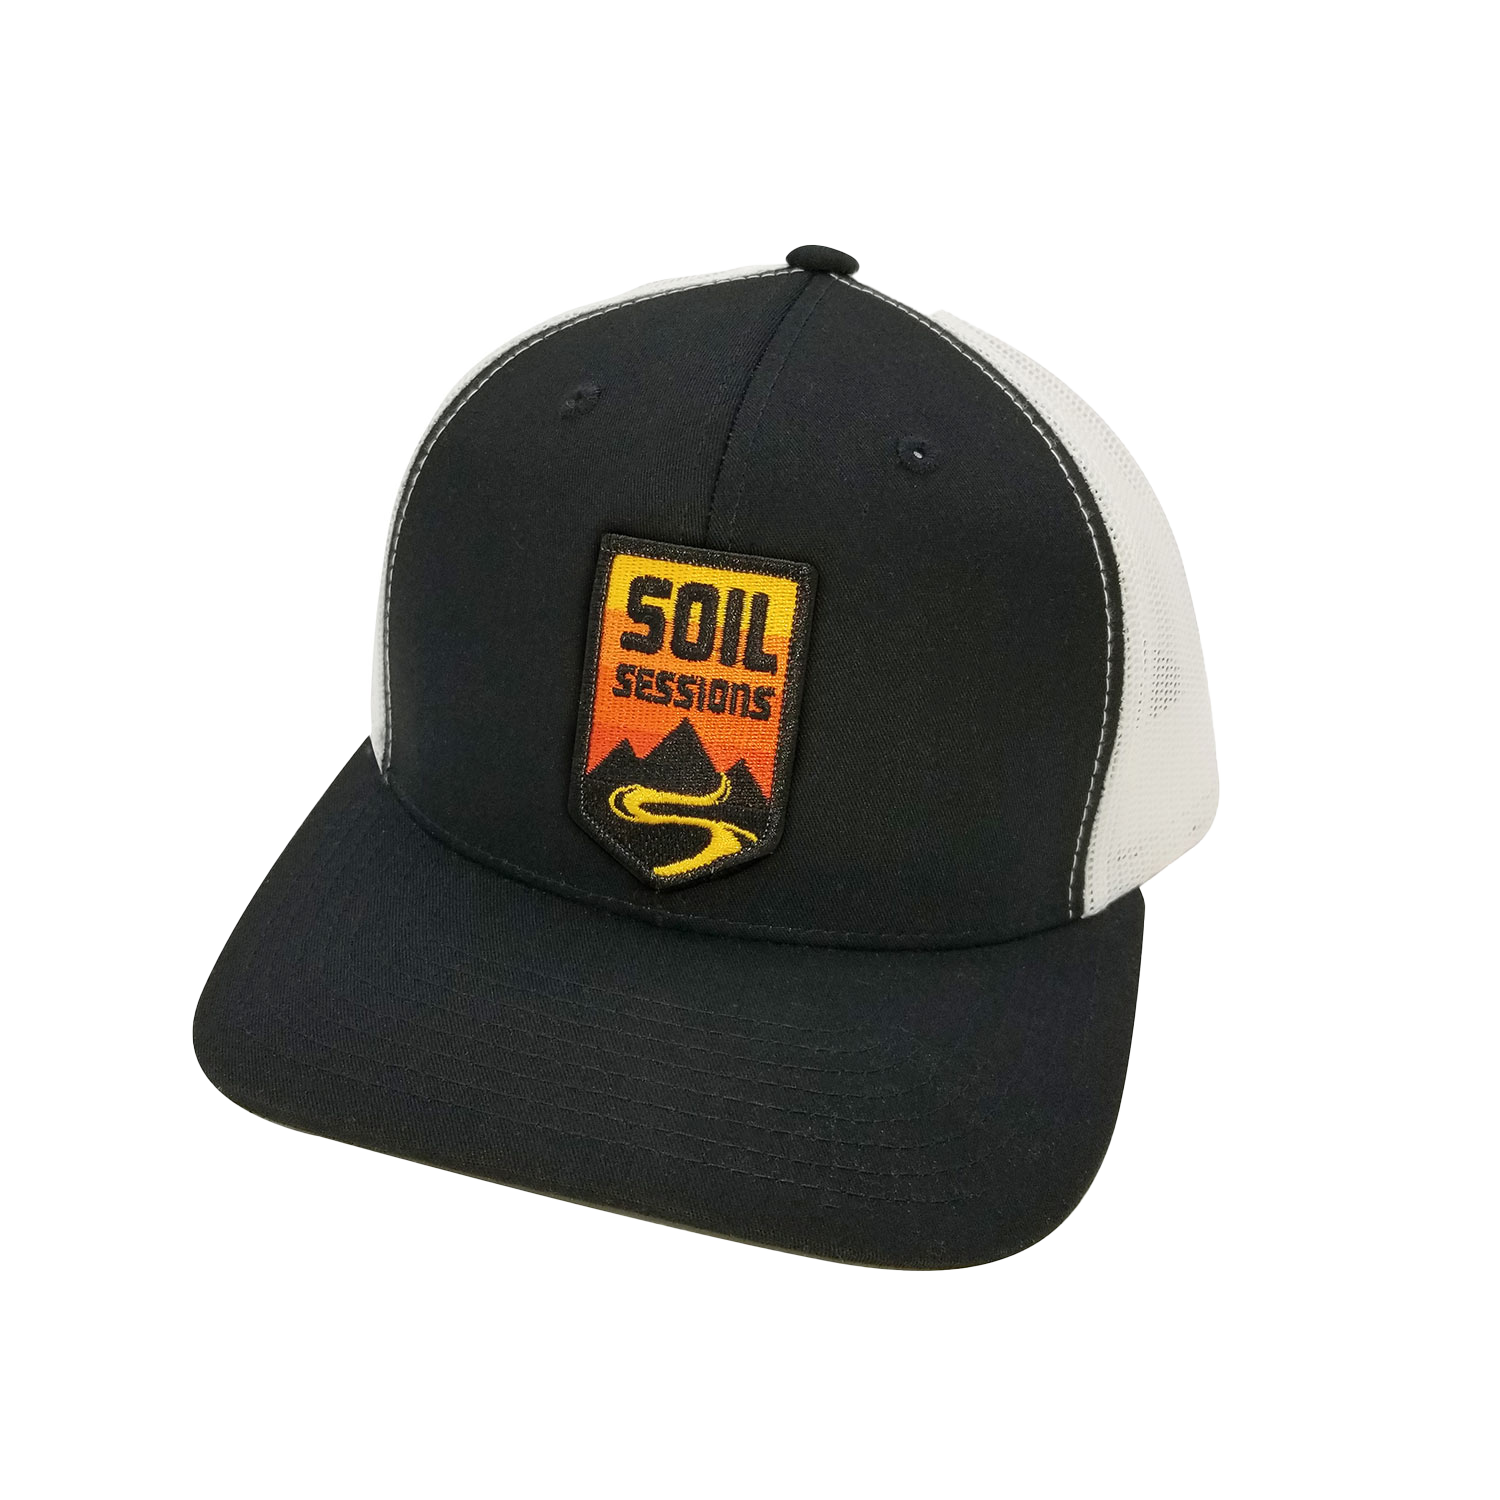 Soil Sessions Hat